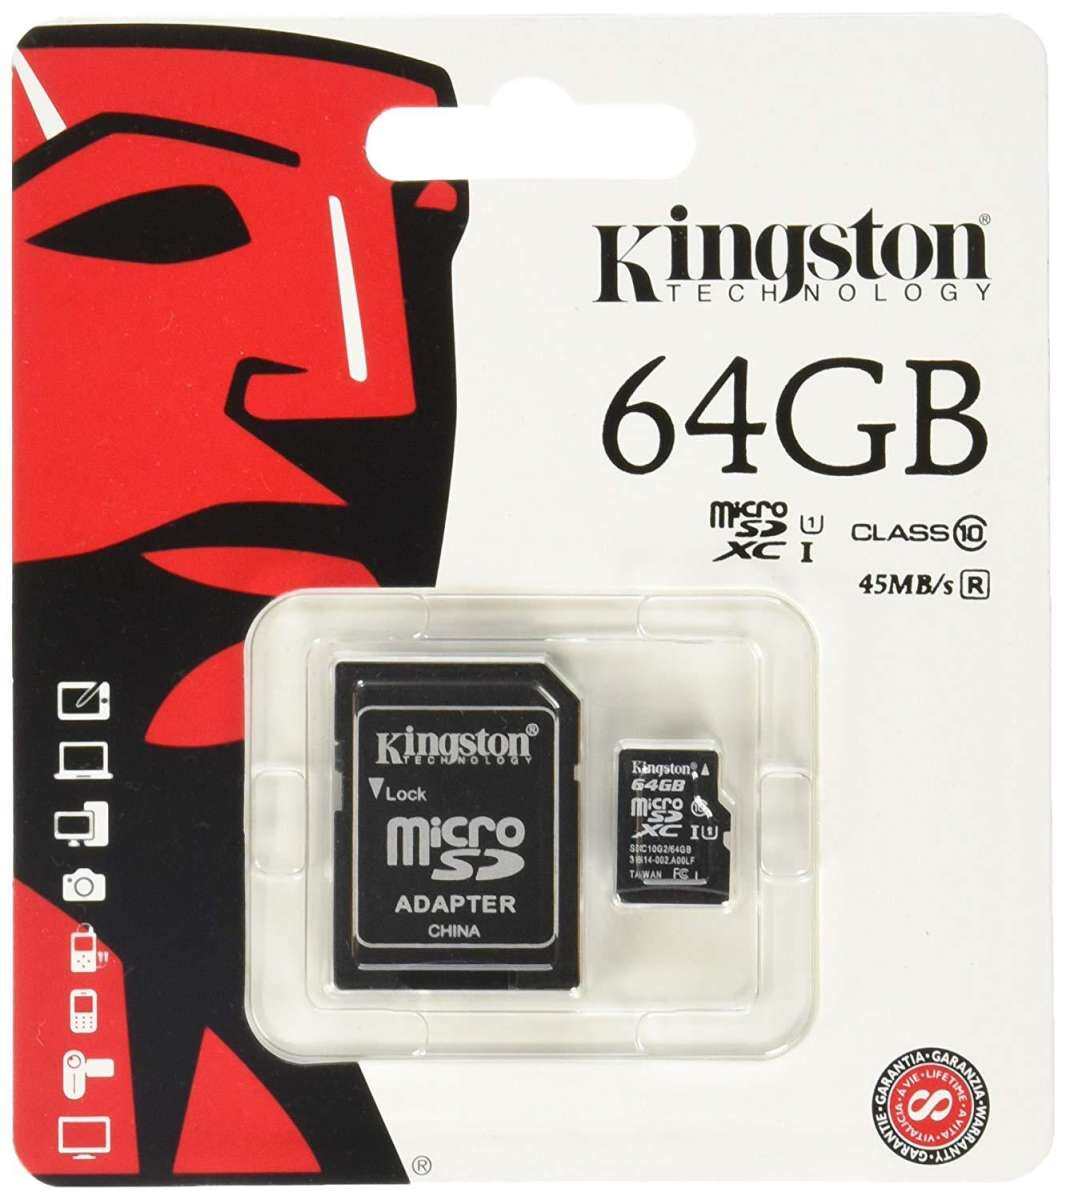 Buy home (ของแท้) Kingston เมมโมรี่การ์ด 64GB SDHC/SDXC Class 10 UHS-I Micro SD Card with Adapter